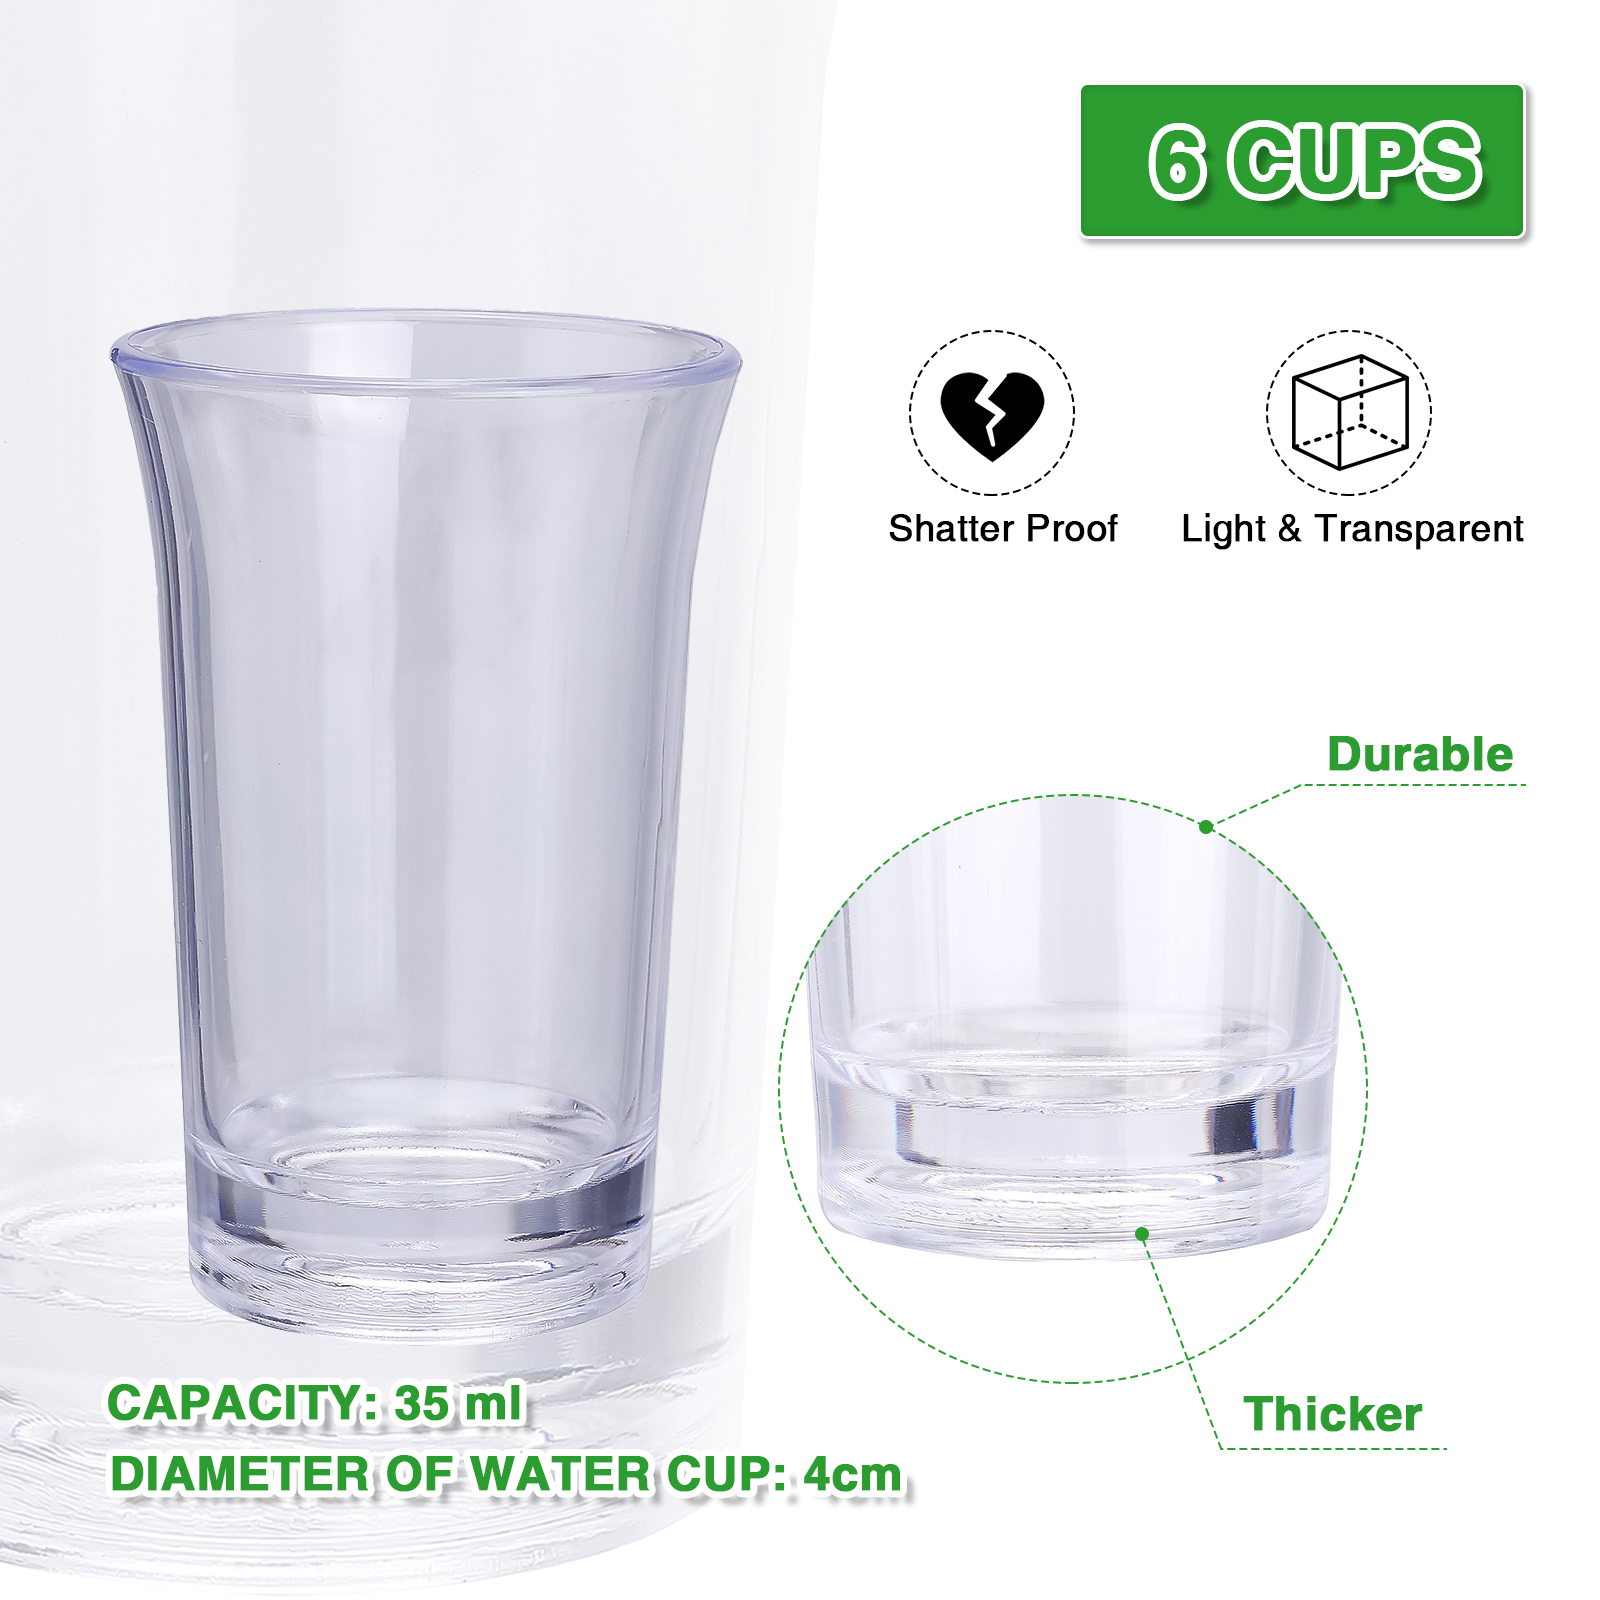 6-Shot-Glass-Dispenser-with-6-Cups-Hanging-Holder-Stand-Rack-Carrier-Caddy-Liquor-Dispenser-Gifts-Dr-1898947-6